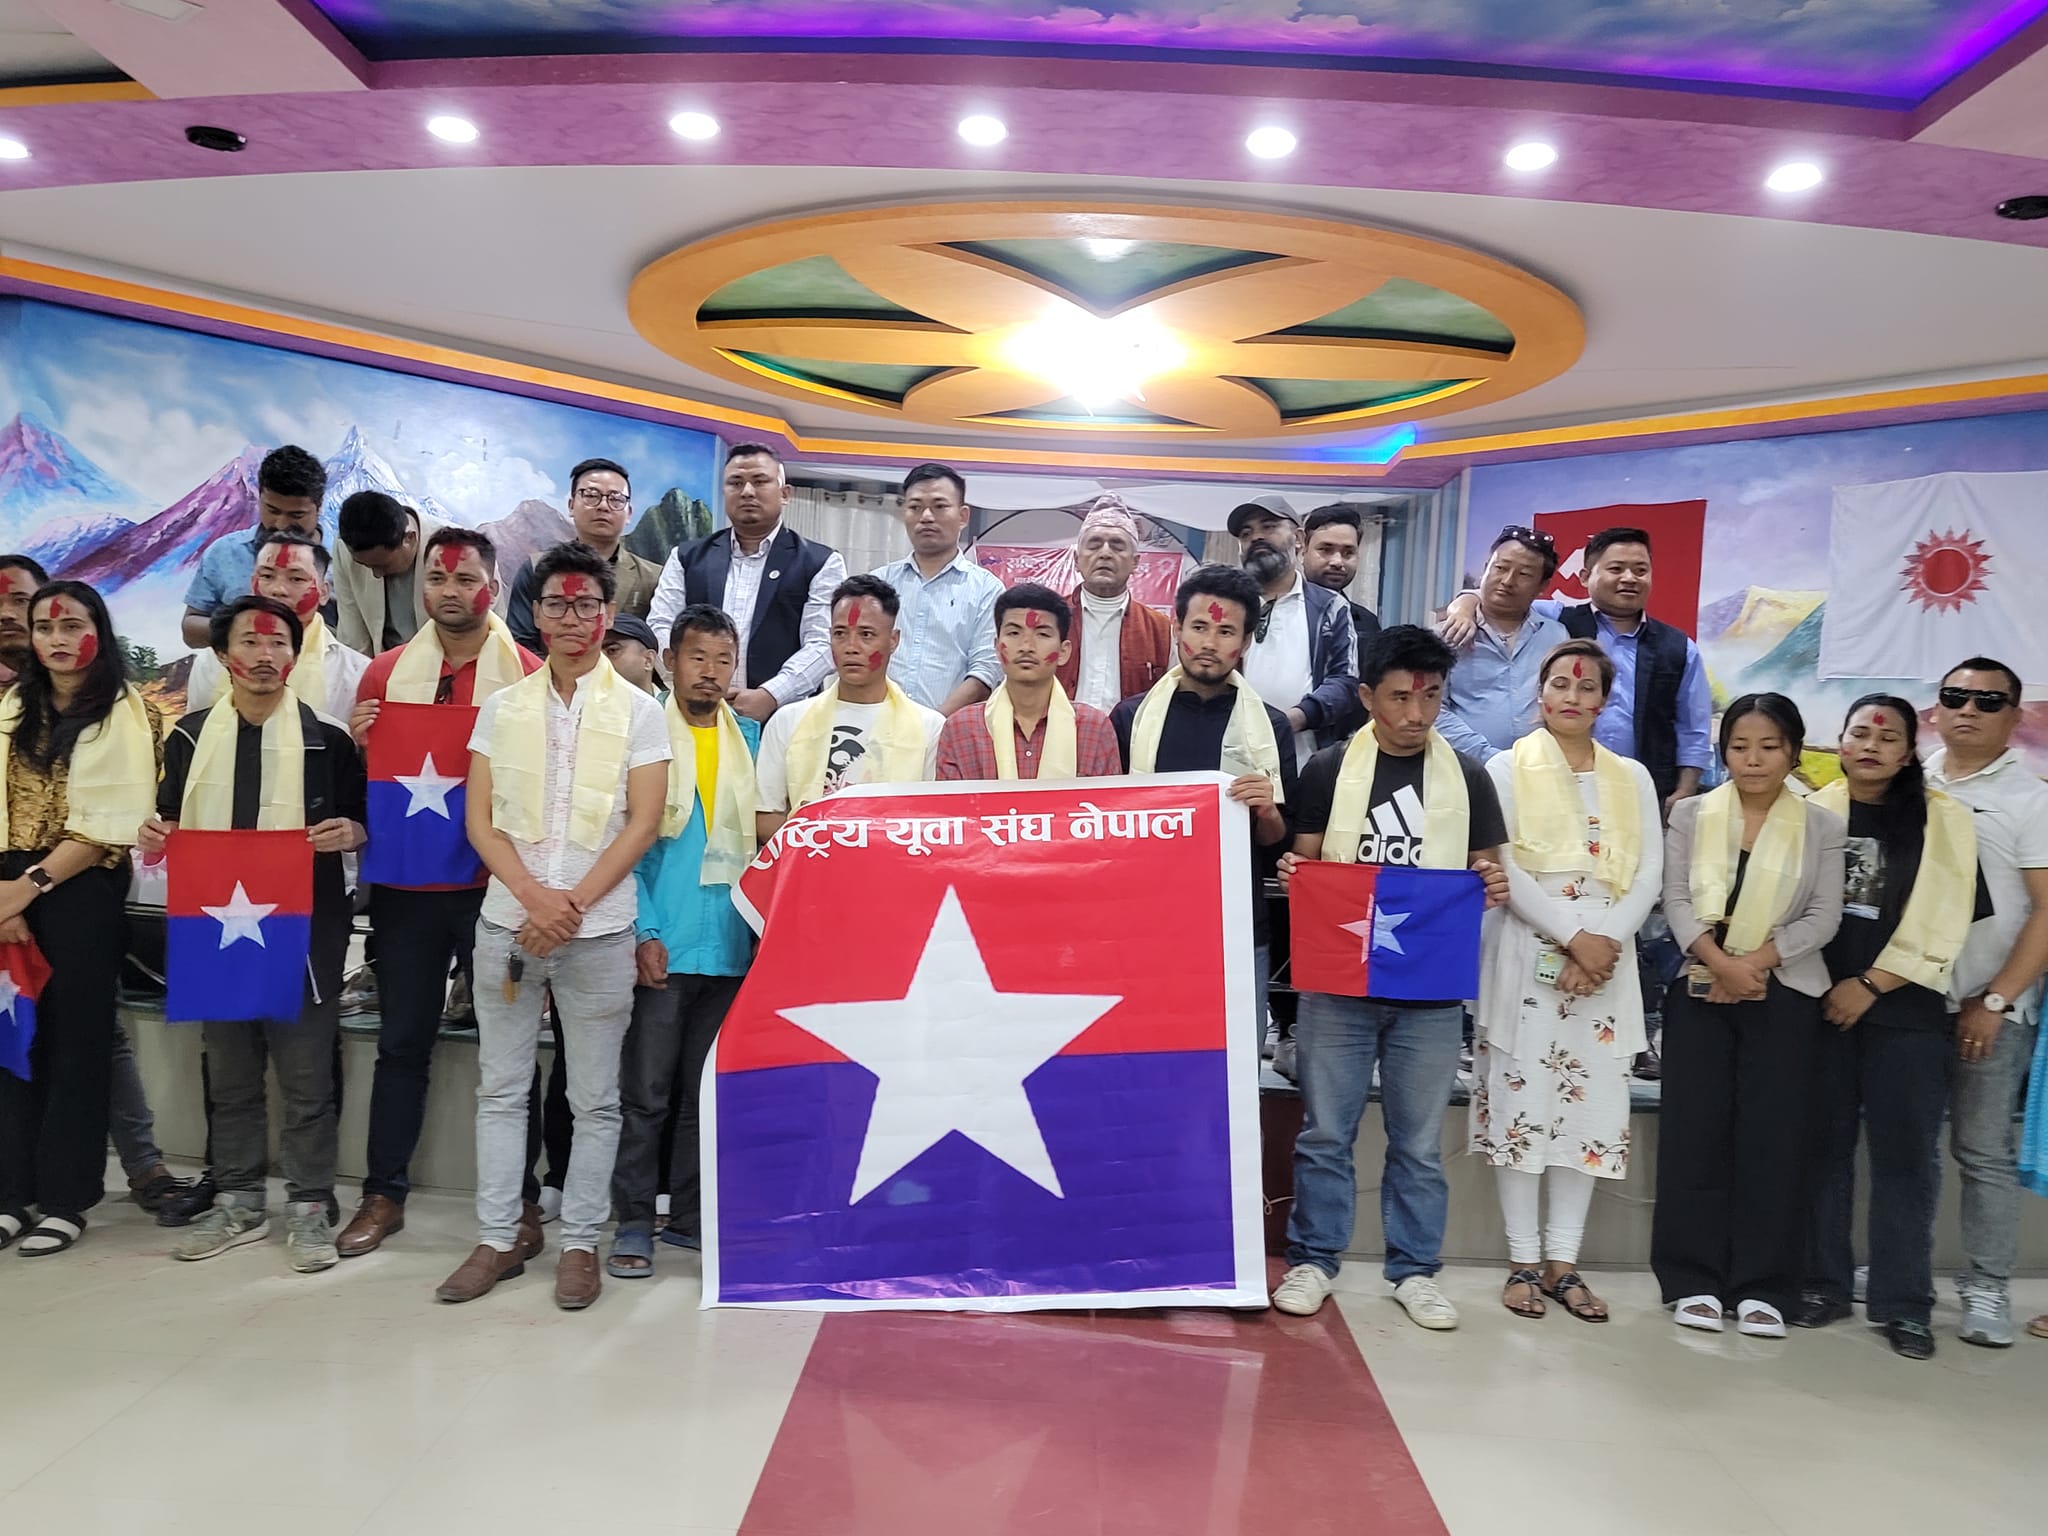 राष्ट्रिय युवा संघ नेपाल पथरीशनिश्चरे अध्यक्षमा उपेन्द्र मादेन